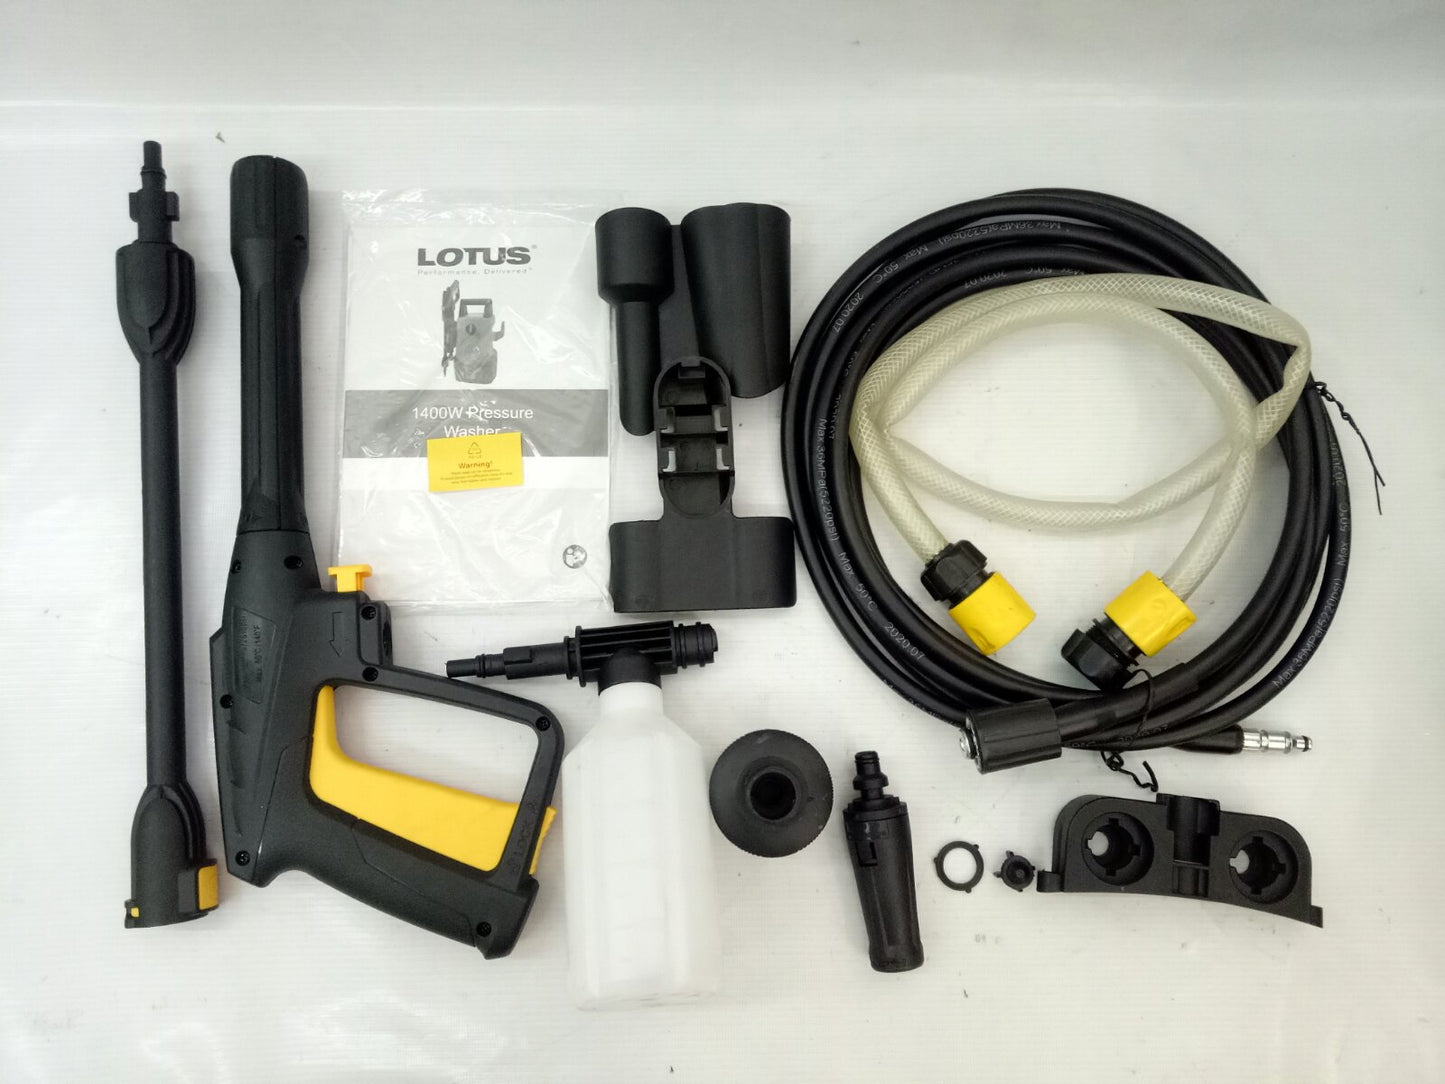 LOTUS LTPW1400C2X Portable Pressure Washer Sprayer 1,400 Watt